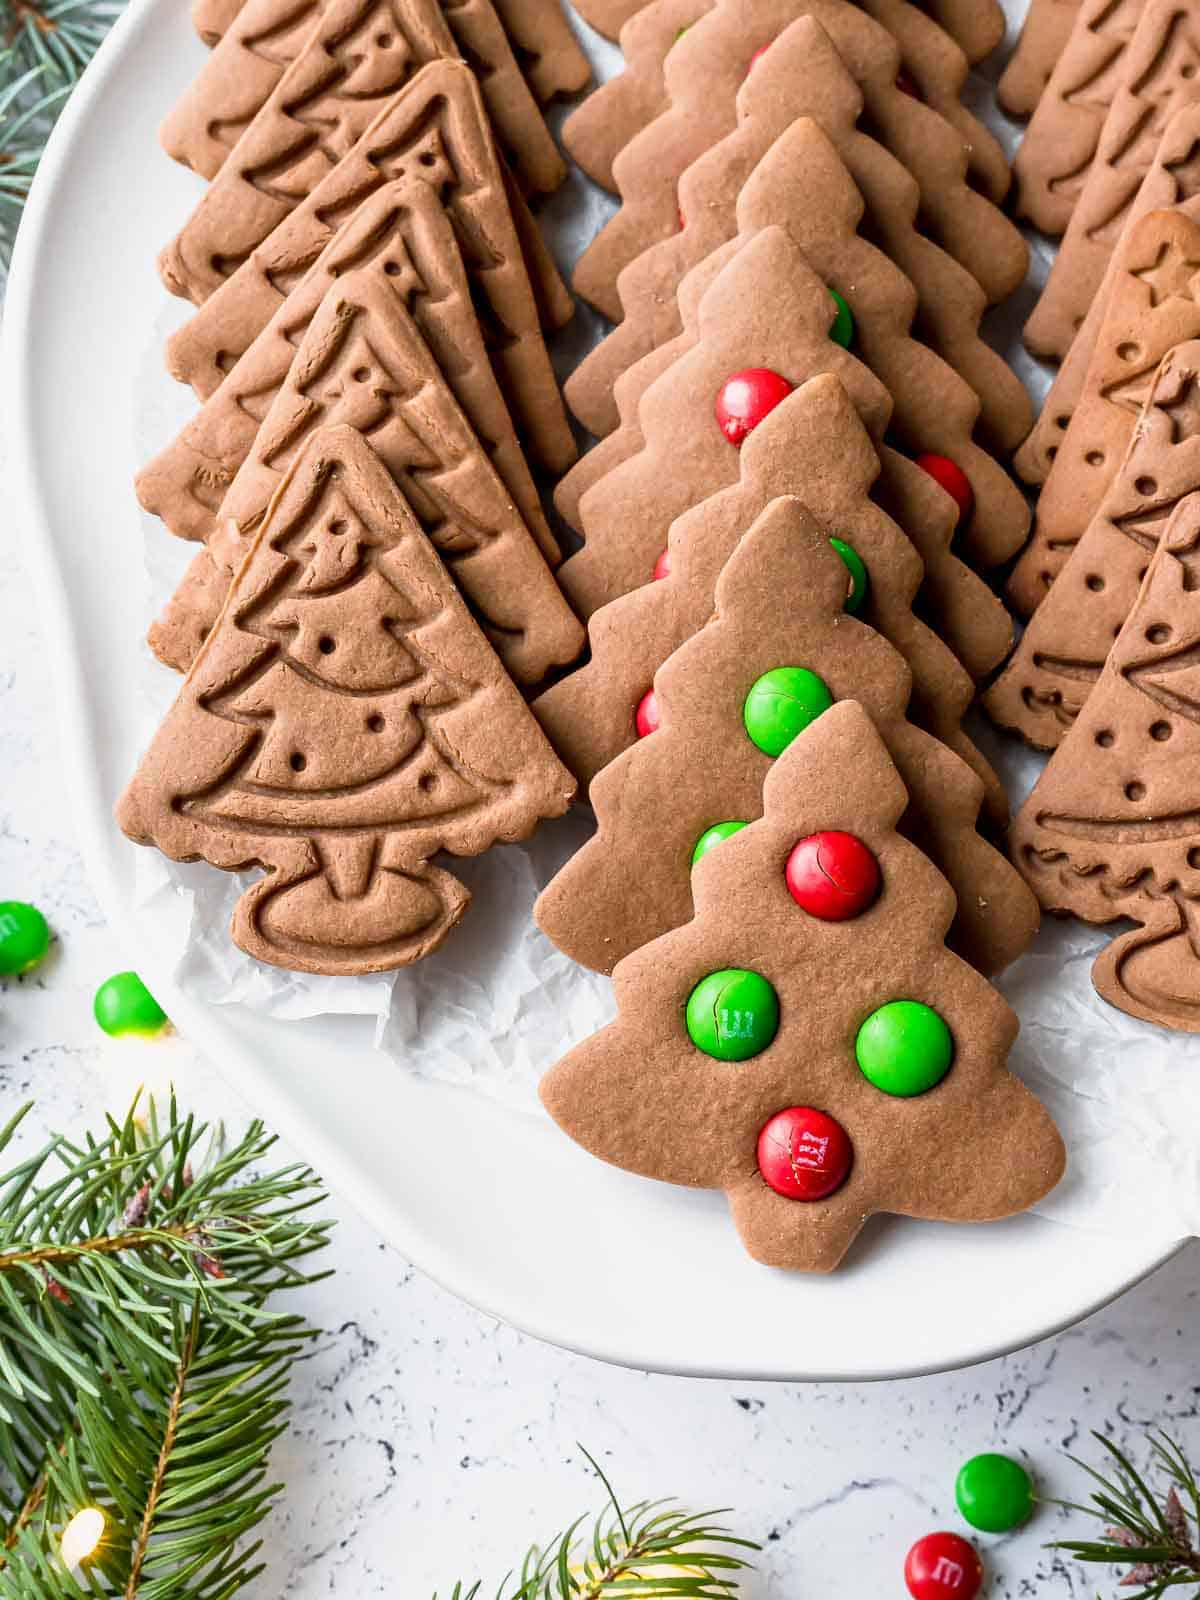 A Festive Christmas Tree Gingerbread Cake Dessert Recipe